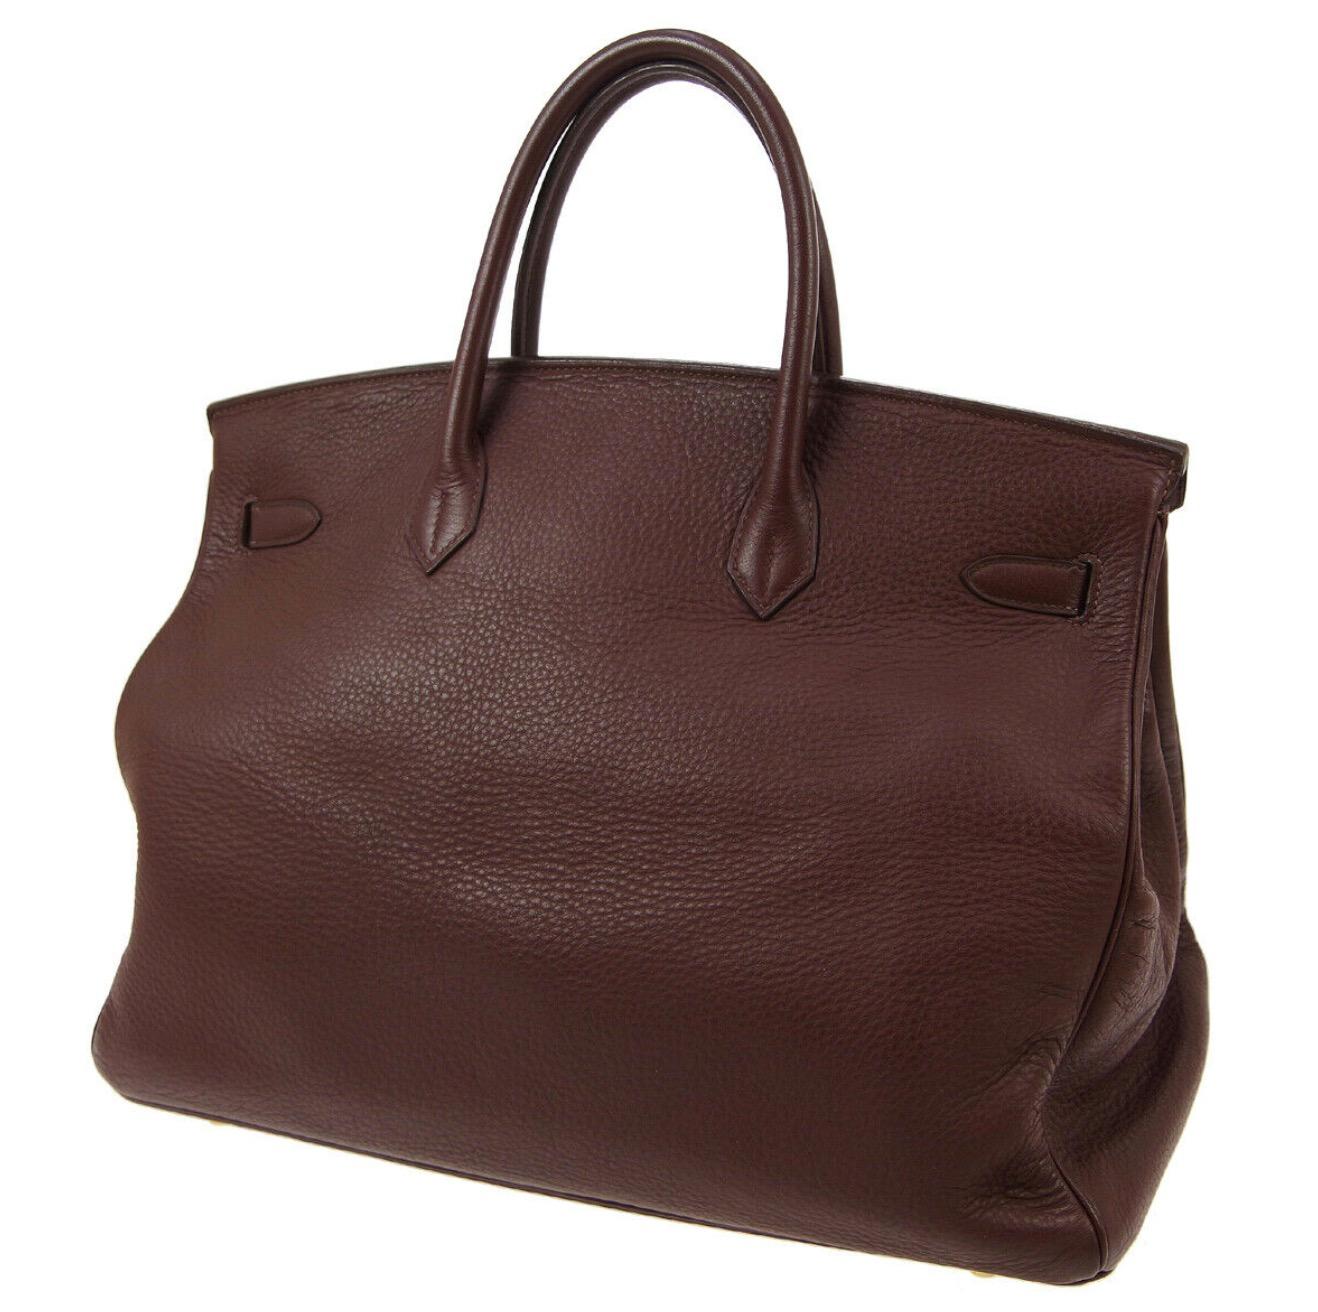 chocolate brown tote bag